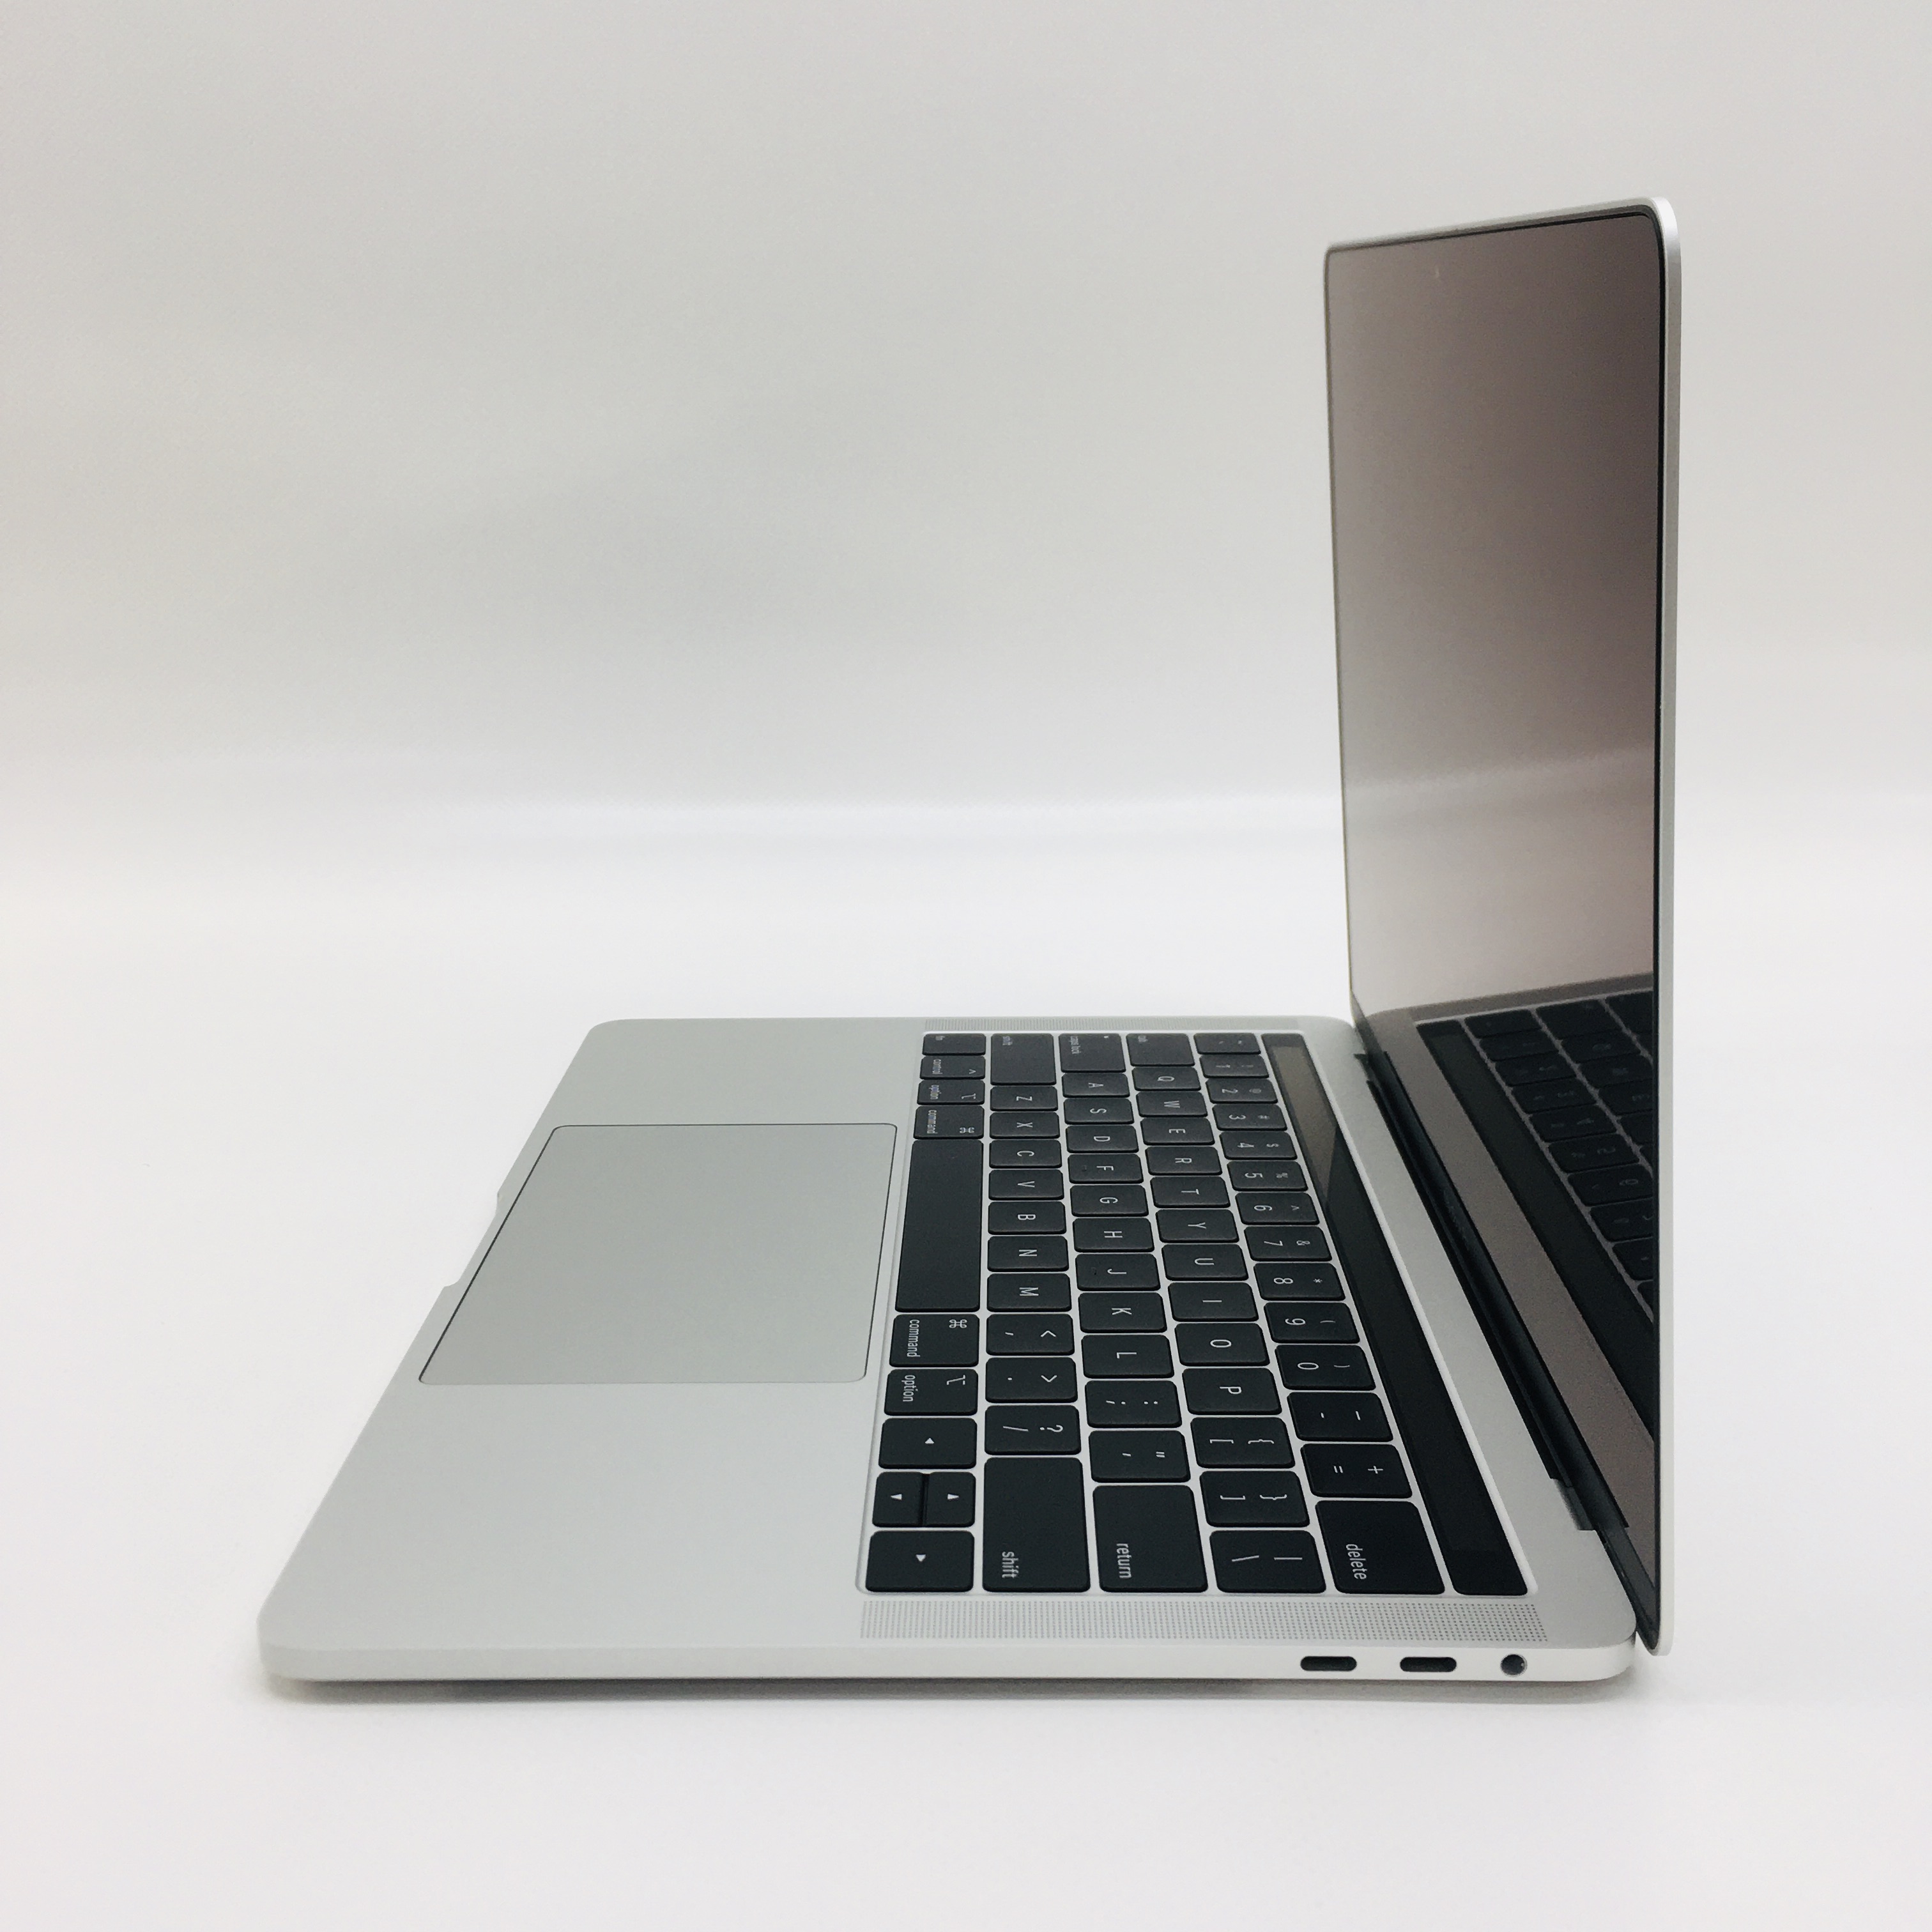 2016 macbook pro 13 inch 16gb on amazon